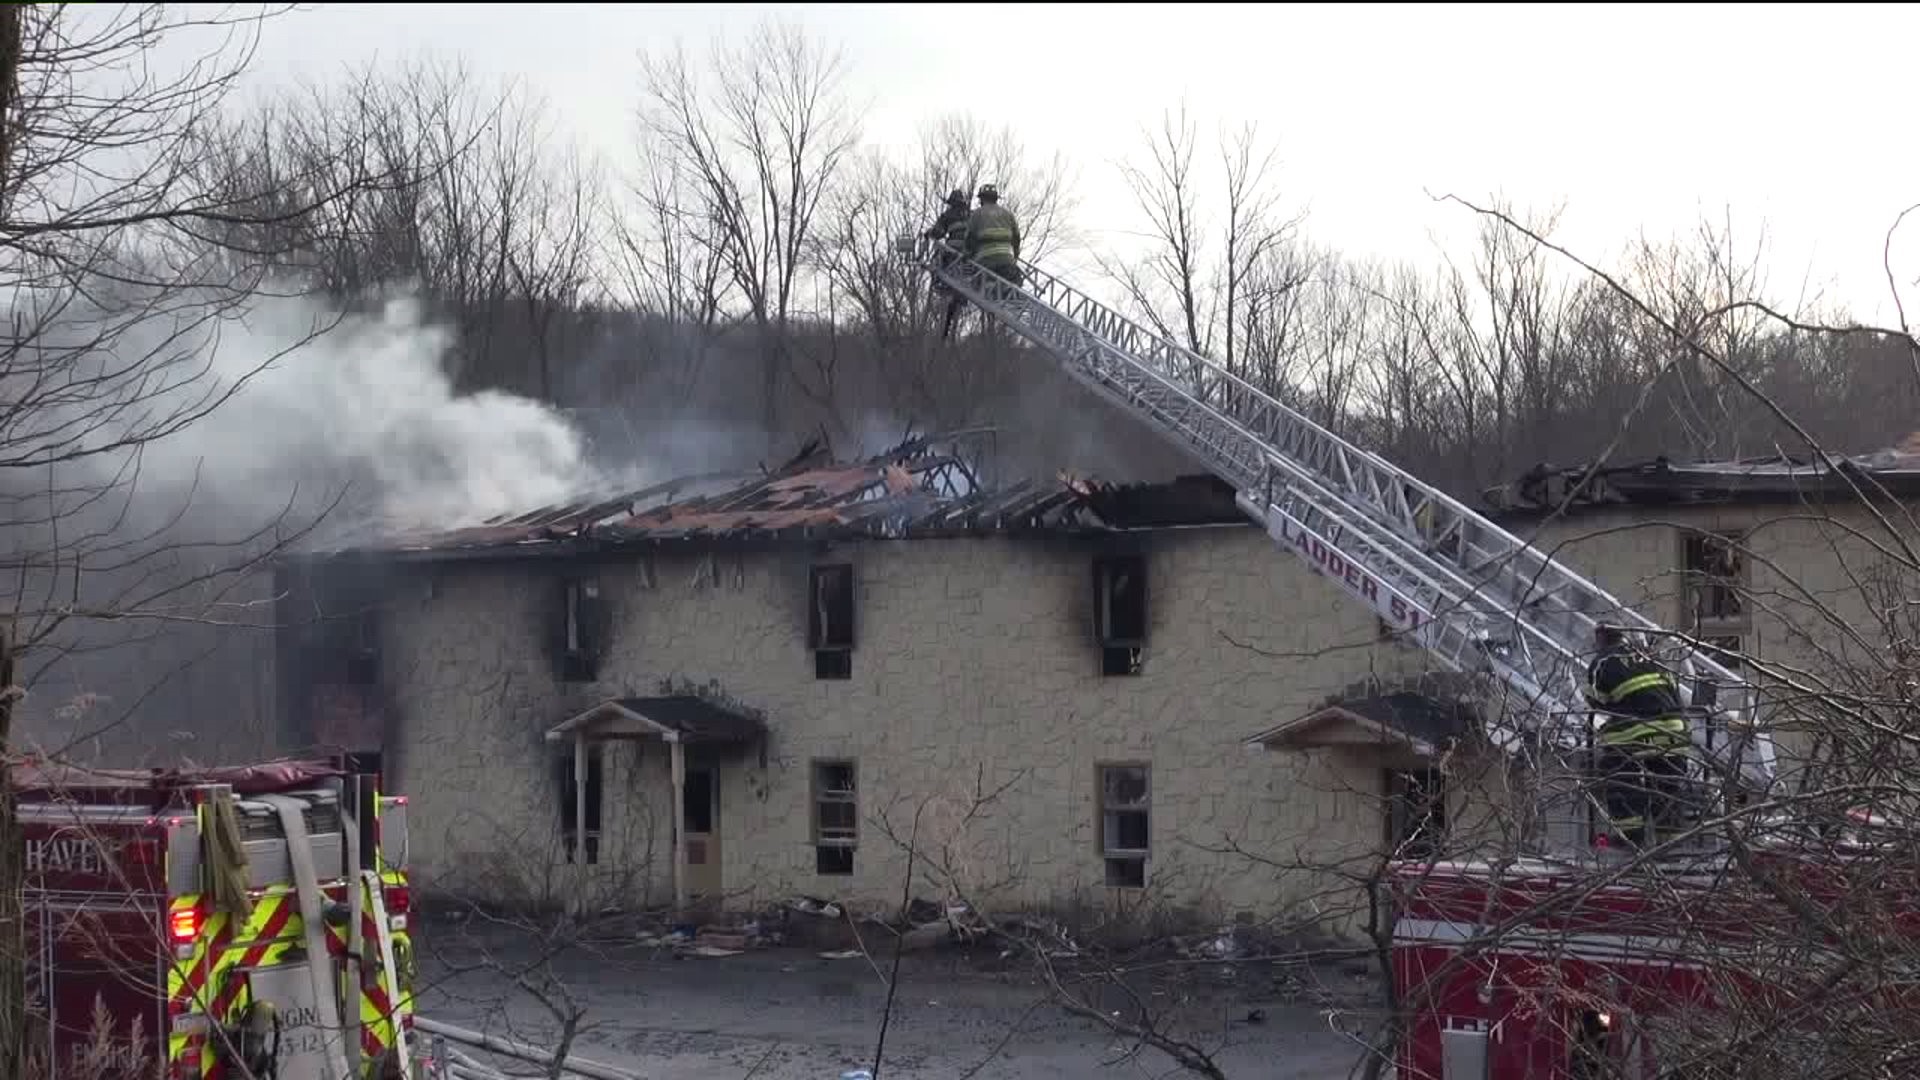 Fire at Former Days Inn Ruled Arson